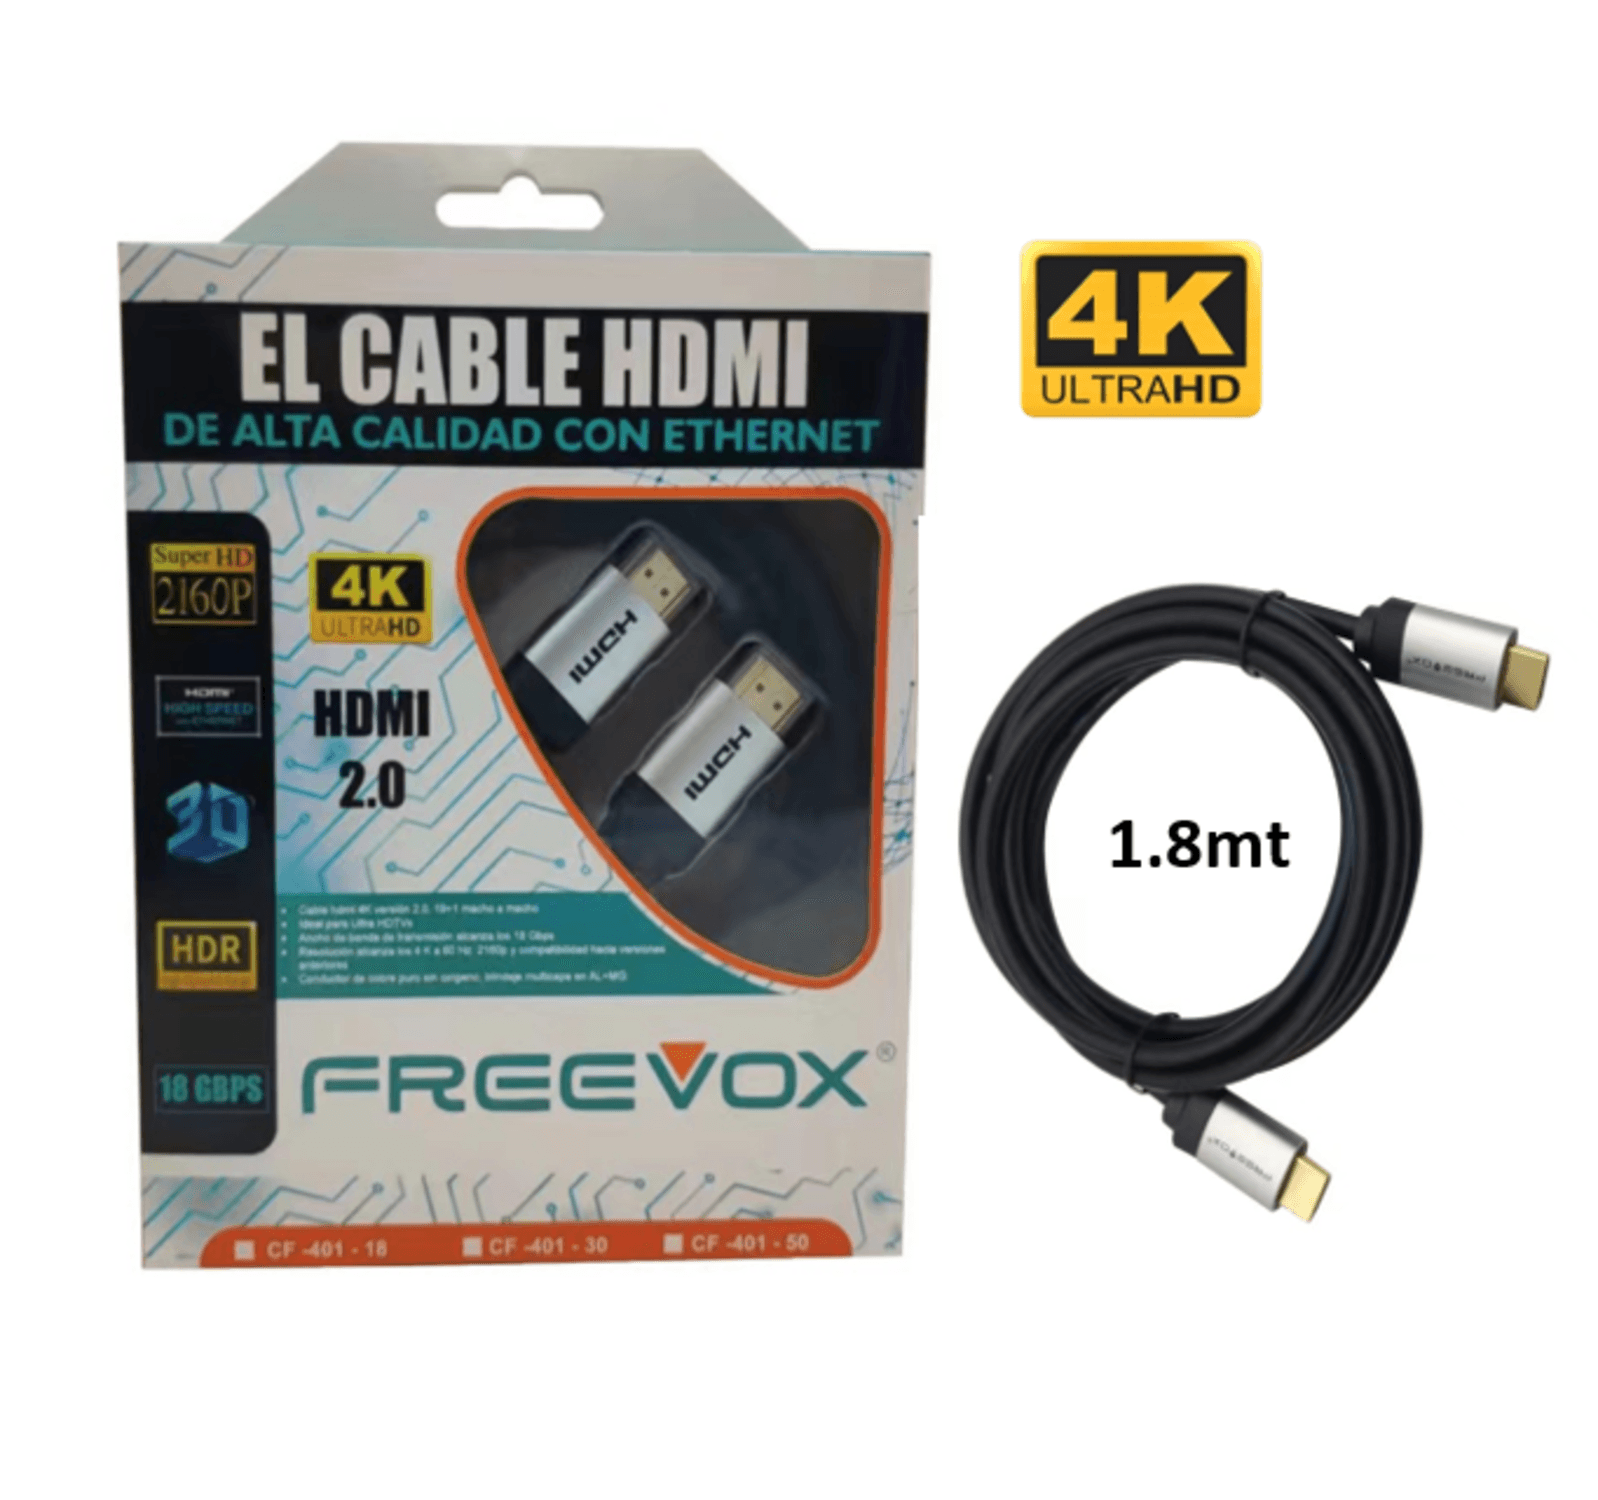 CABLE HDMI FREEVOX 4K V2.0 – 1.8m con Ethernet